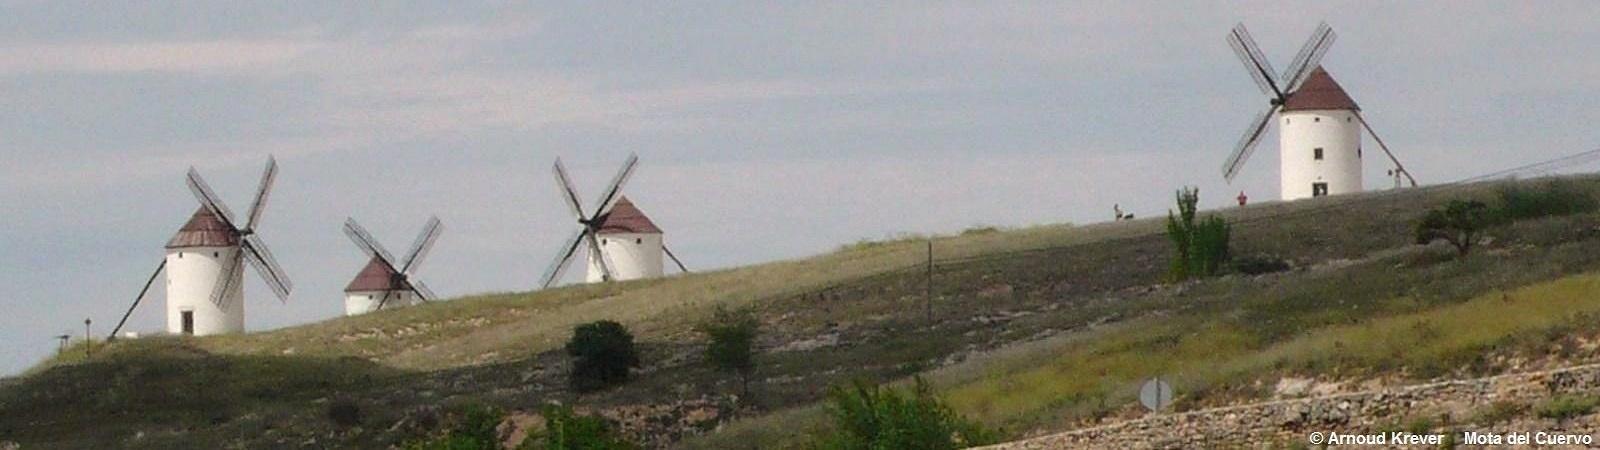 Levante (880) Antieke windmolens bij Mota del Cuervo